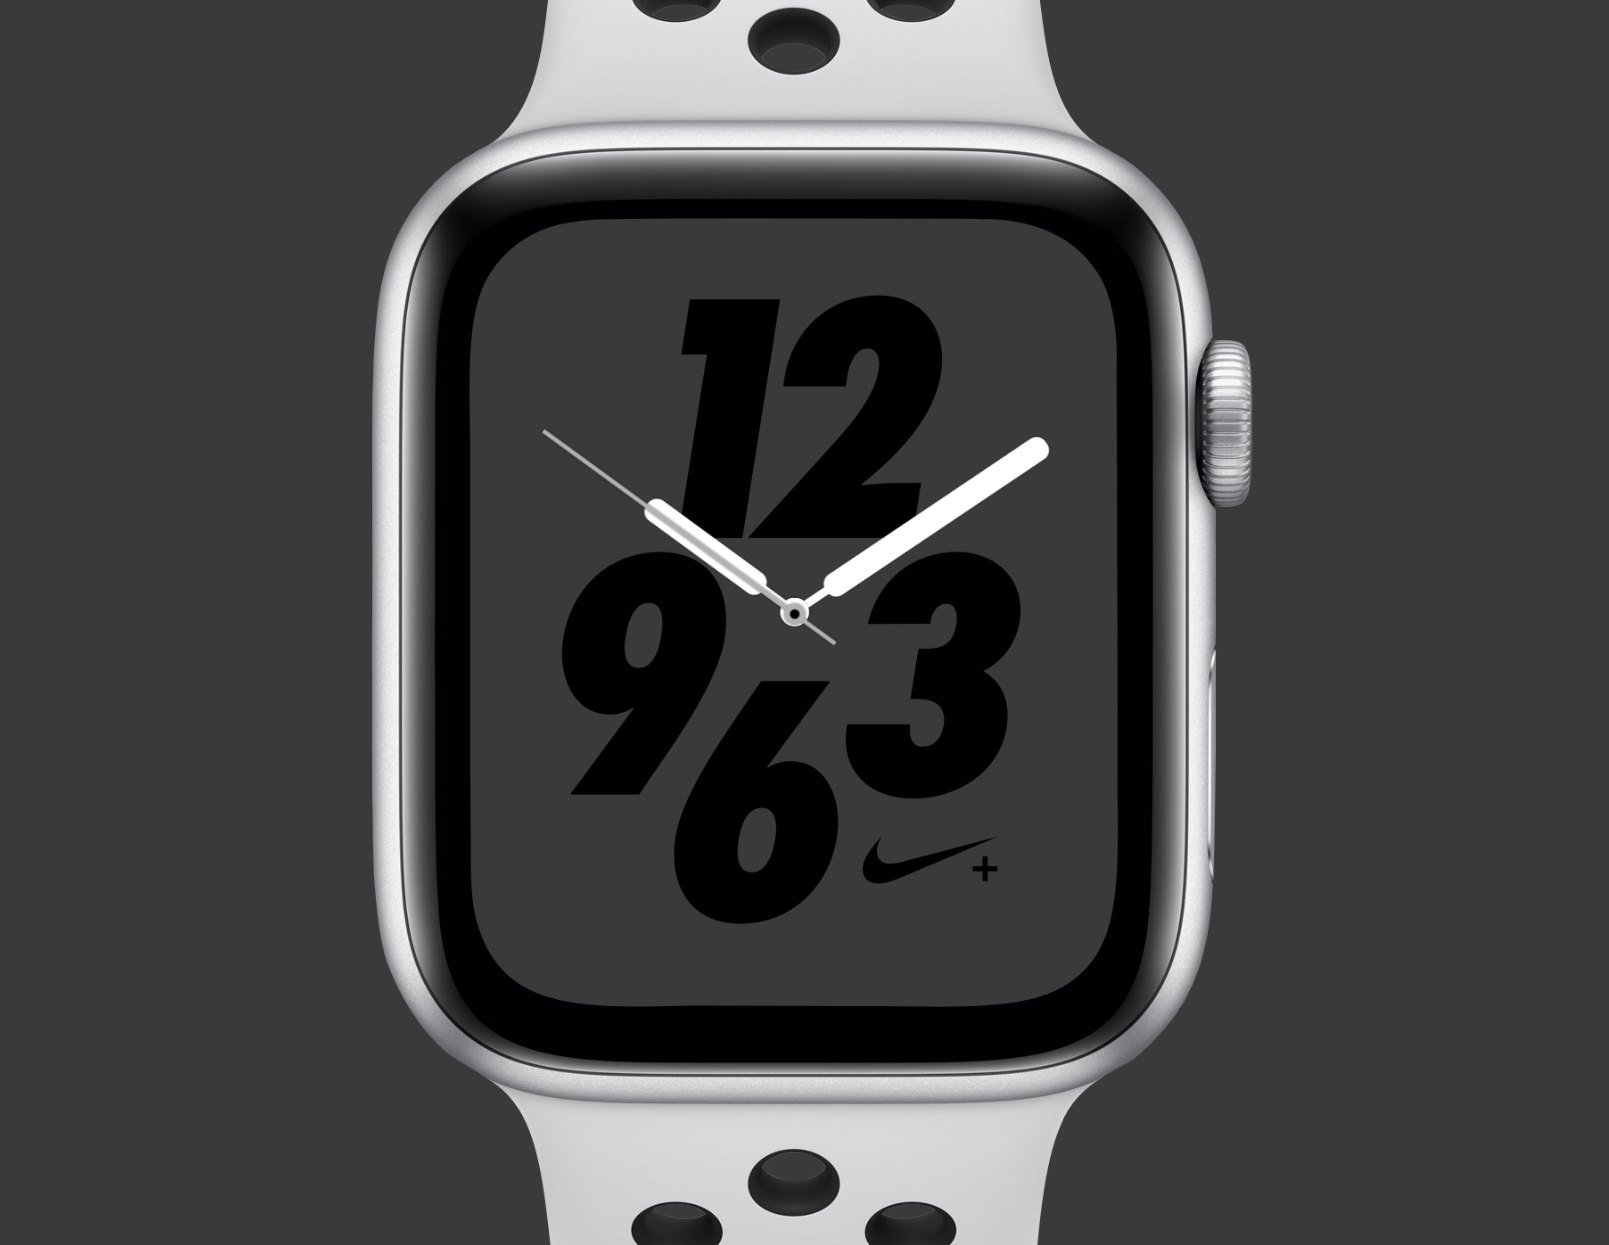 Циферблат часы айфон. Эппл вотч 7 Nike. Циферблаты найк для Эппл вотч. Циферблат часов Apple IWATCH 7 найк. Apple watch Nike Series 7 GPS.